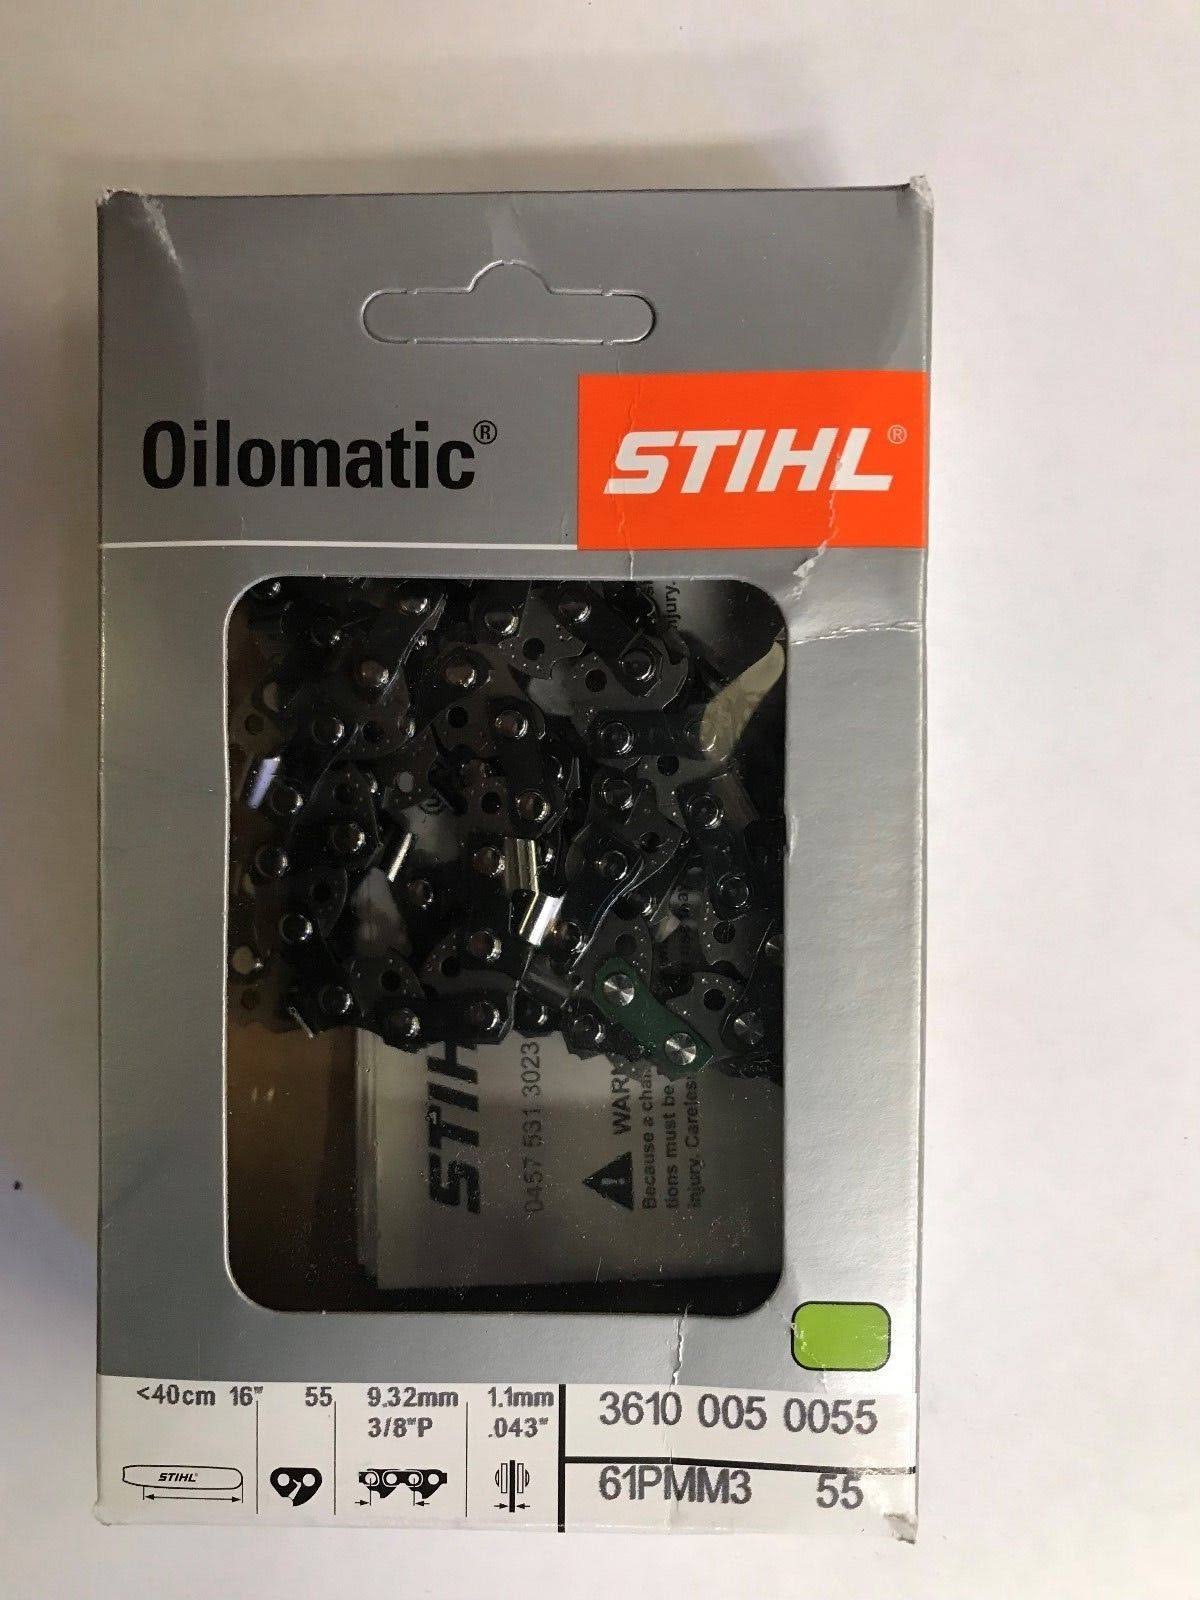 Stihl 61PMMC355 Oilomatic Picco Micro Mini Comfort Chainsaw Chain - 16", Chromized Teeth